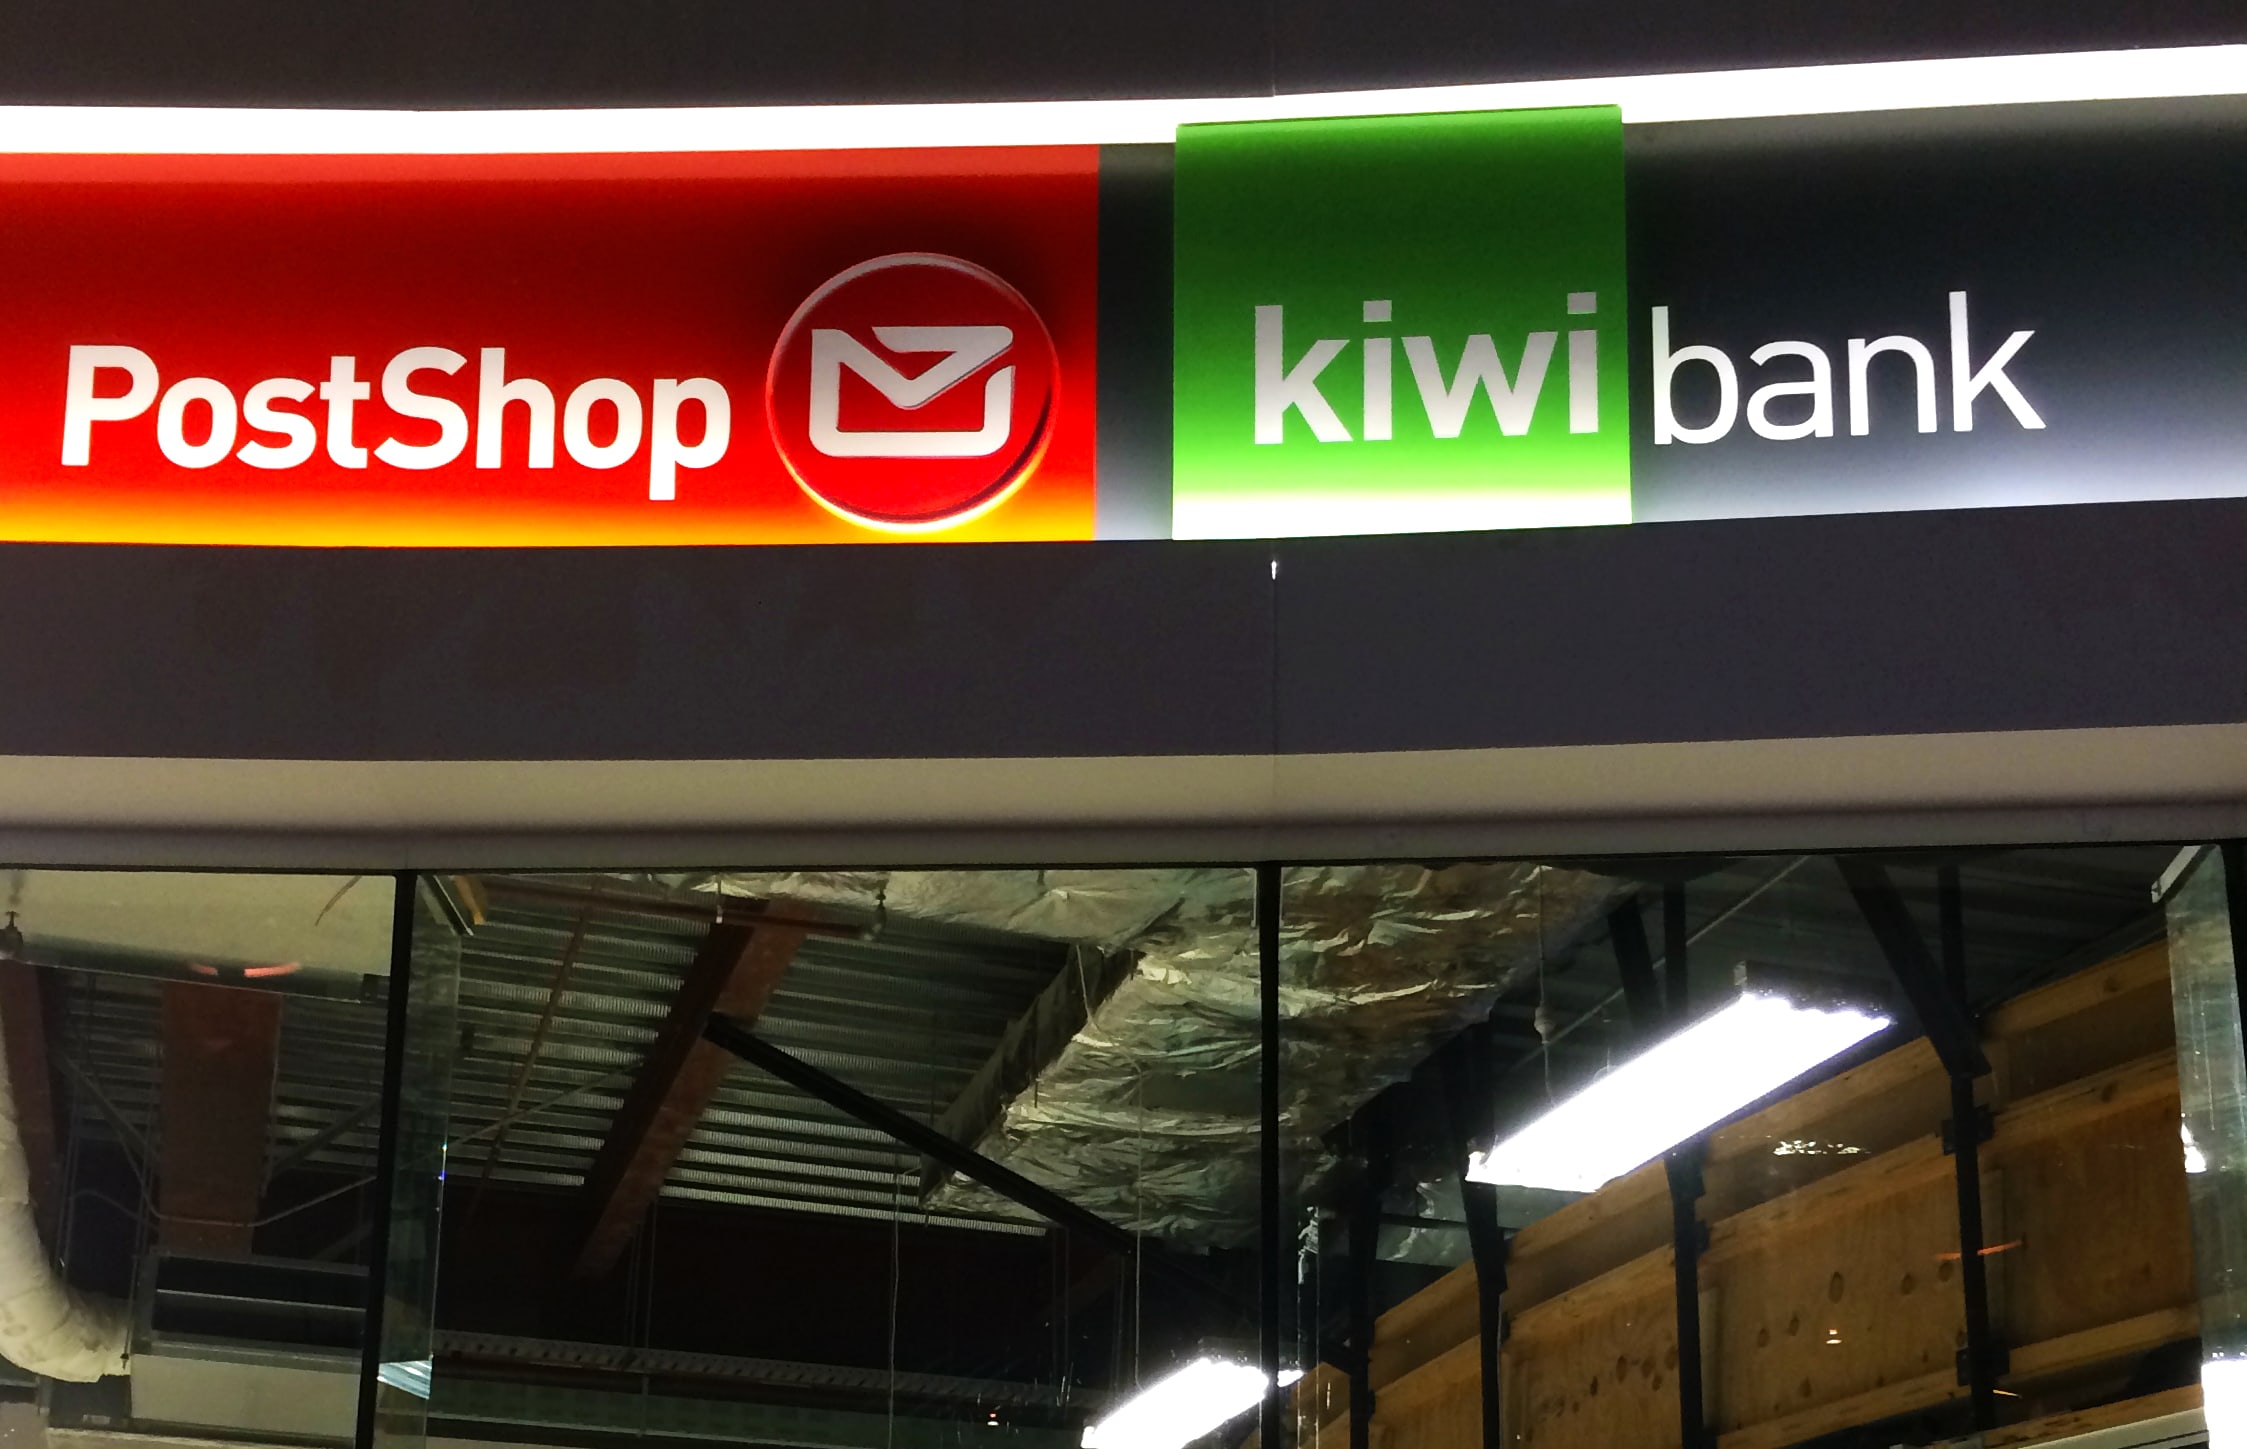 New Zealand Post Shop and Kiwi Bank shop.